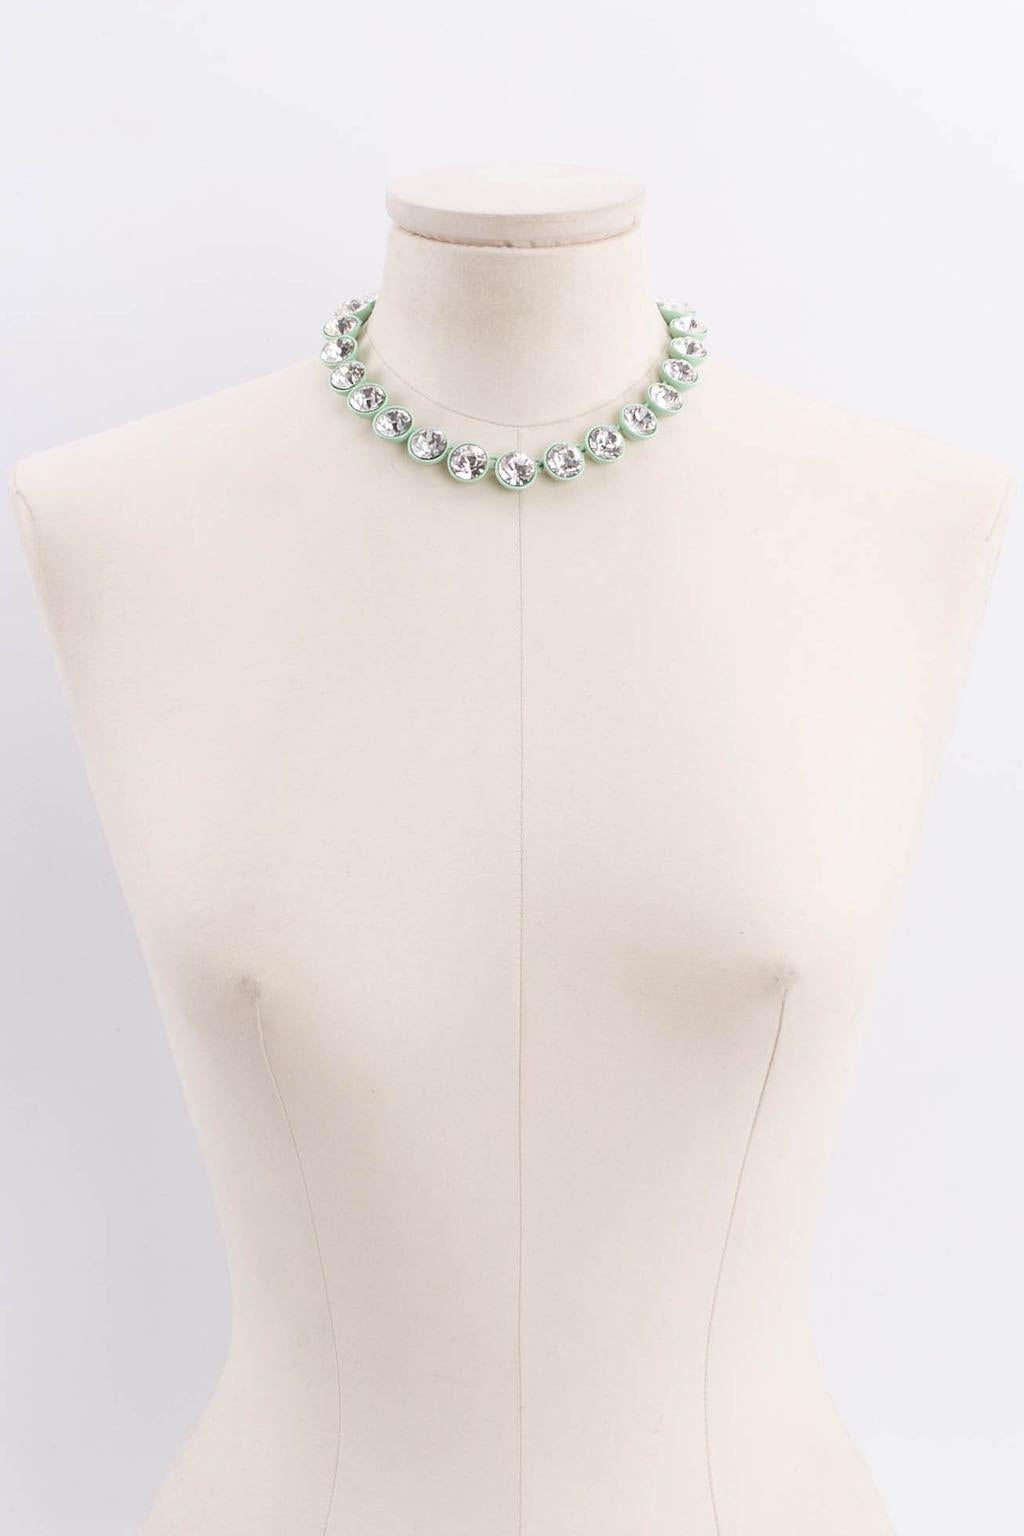 Women's Balenciaga Rhinestones Necklace For Sale